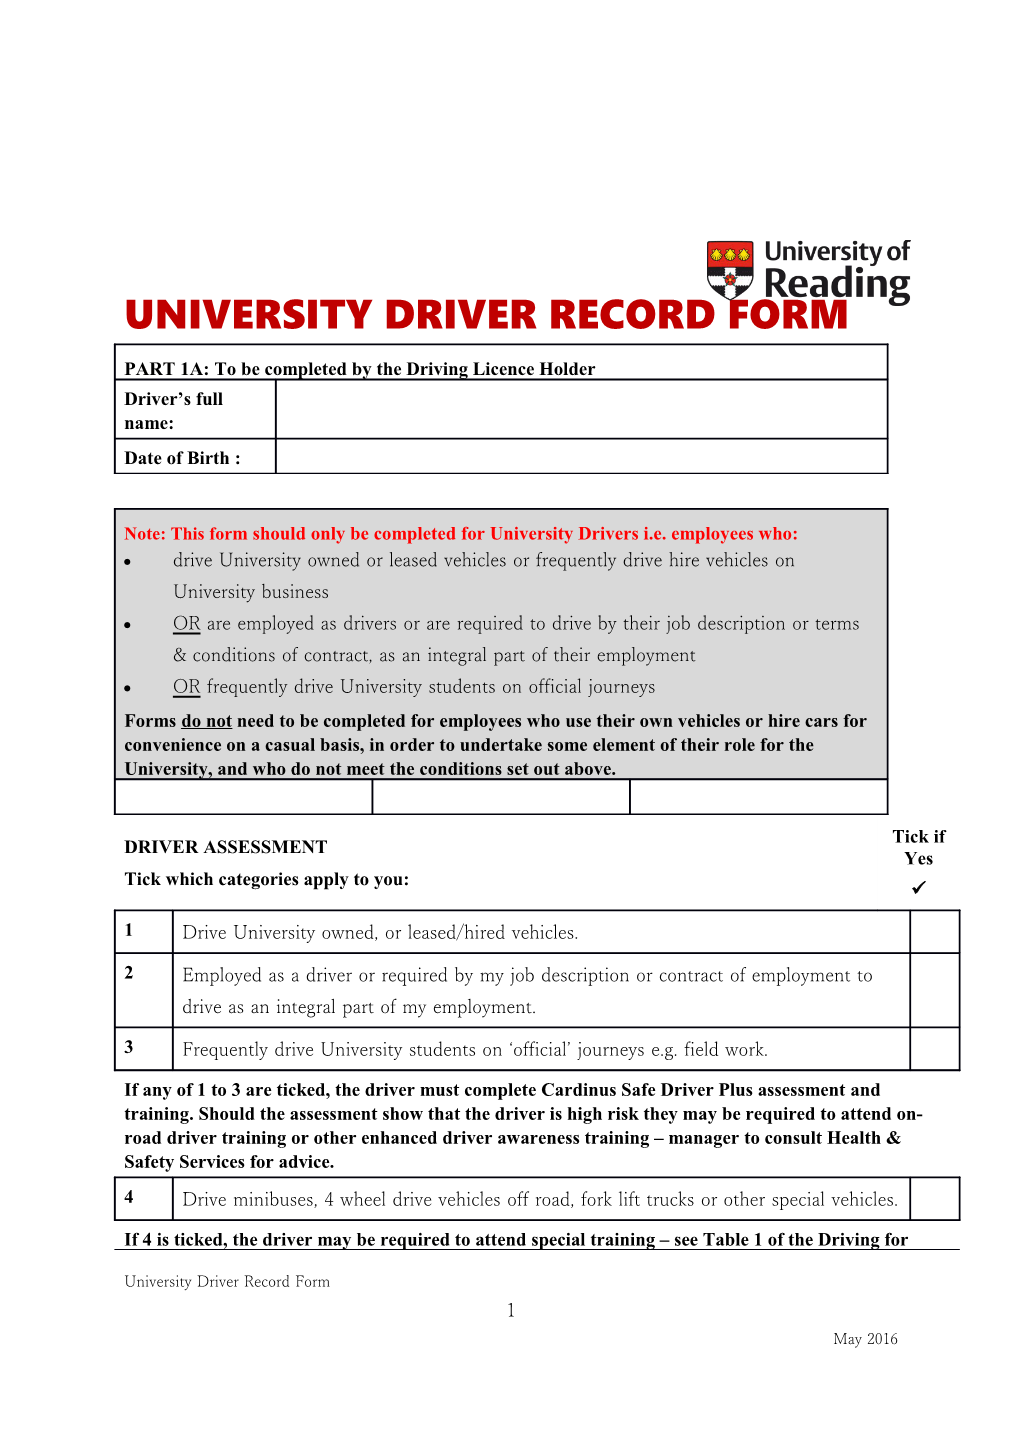 University Driver Record Form